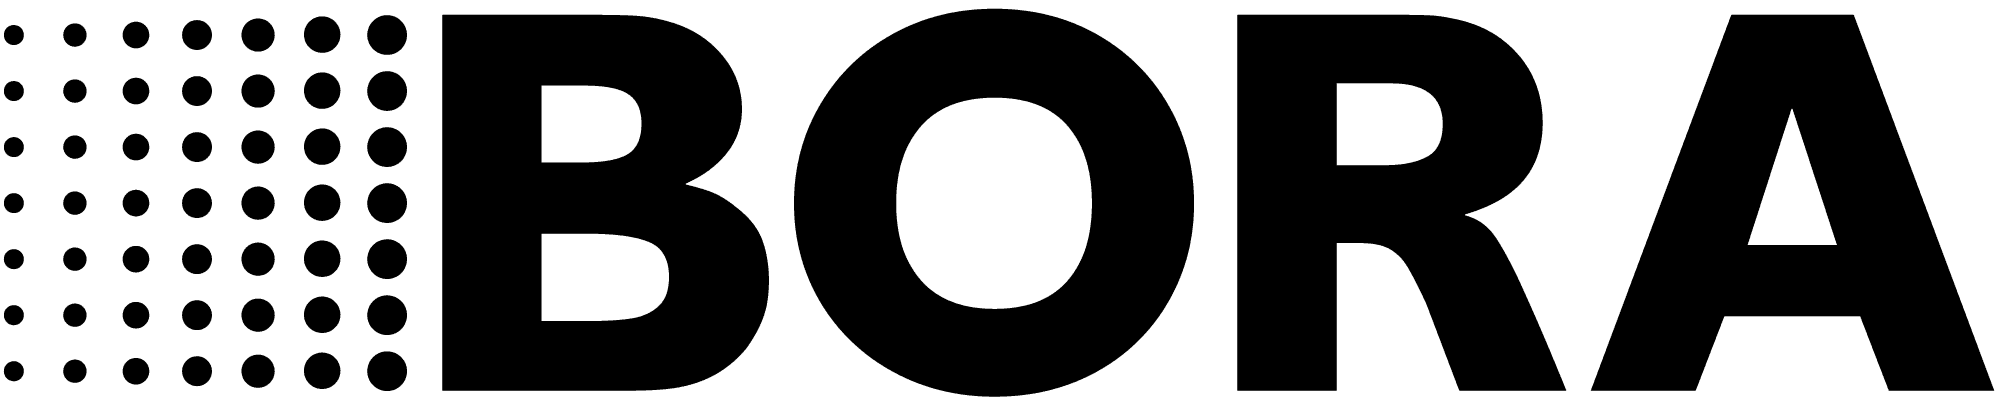 BORA Logo